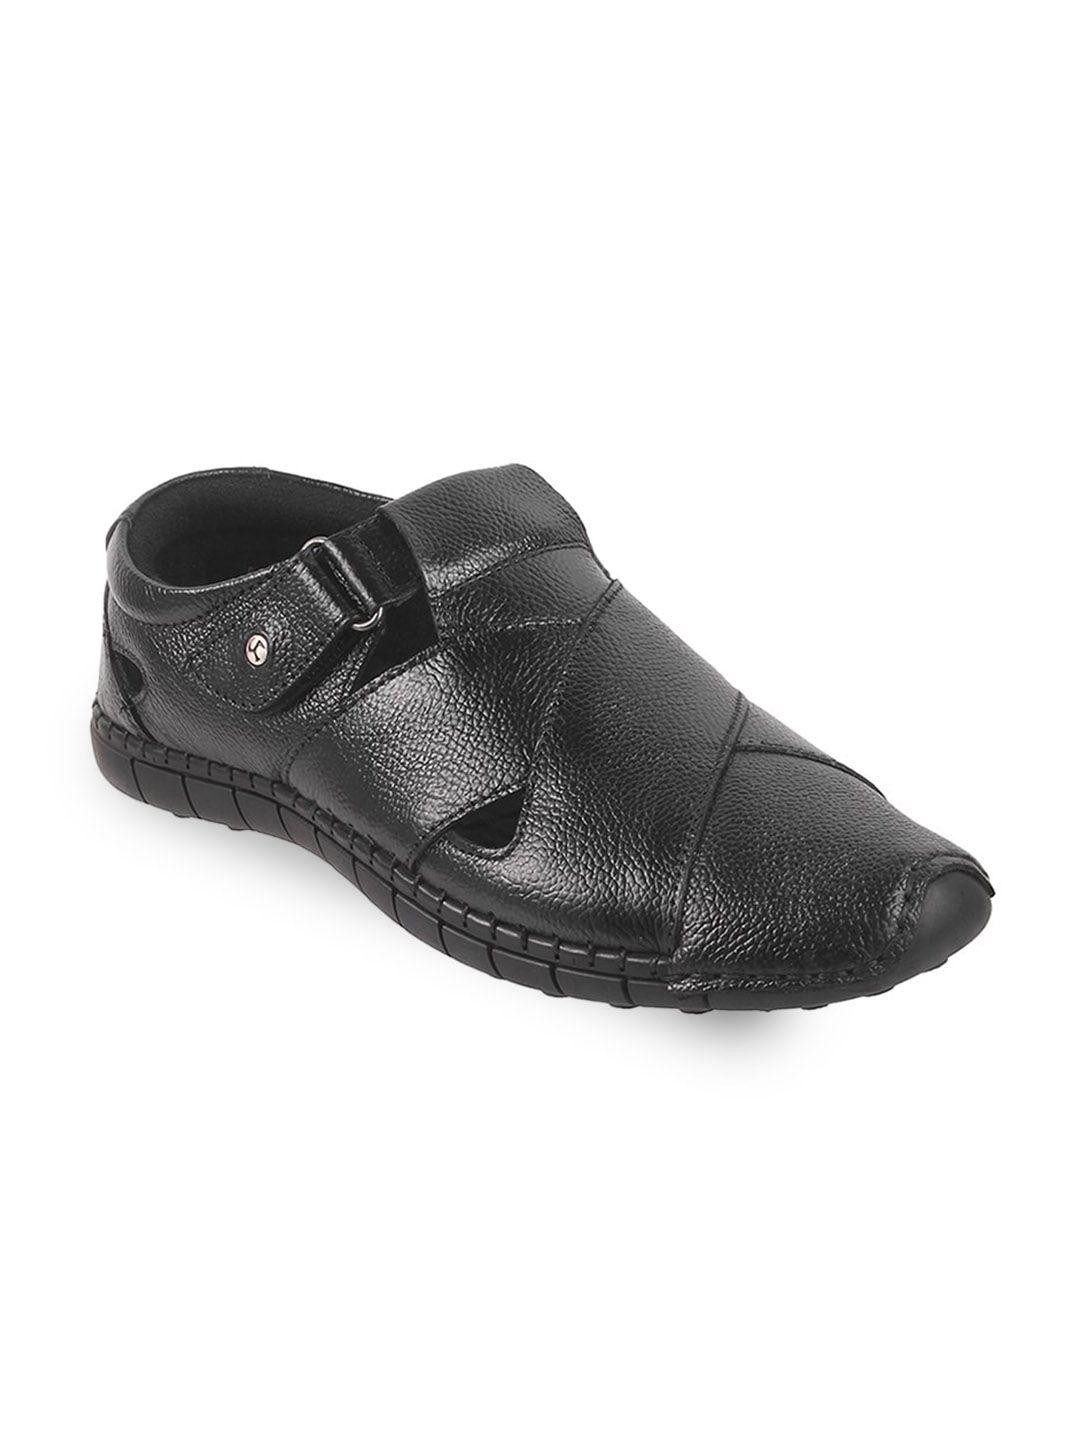 mochi men textured leather shoe-style sandals